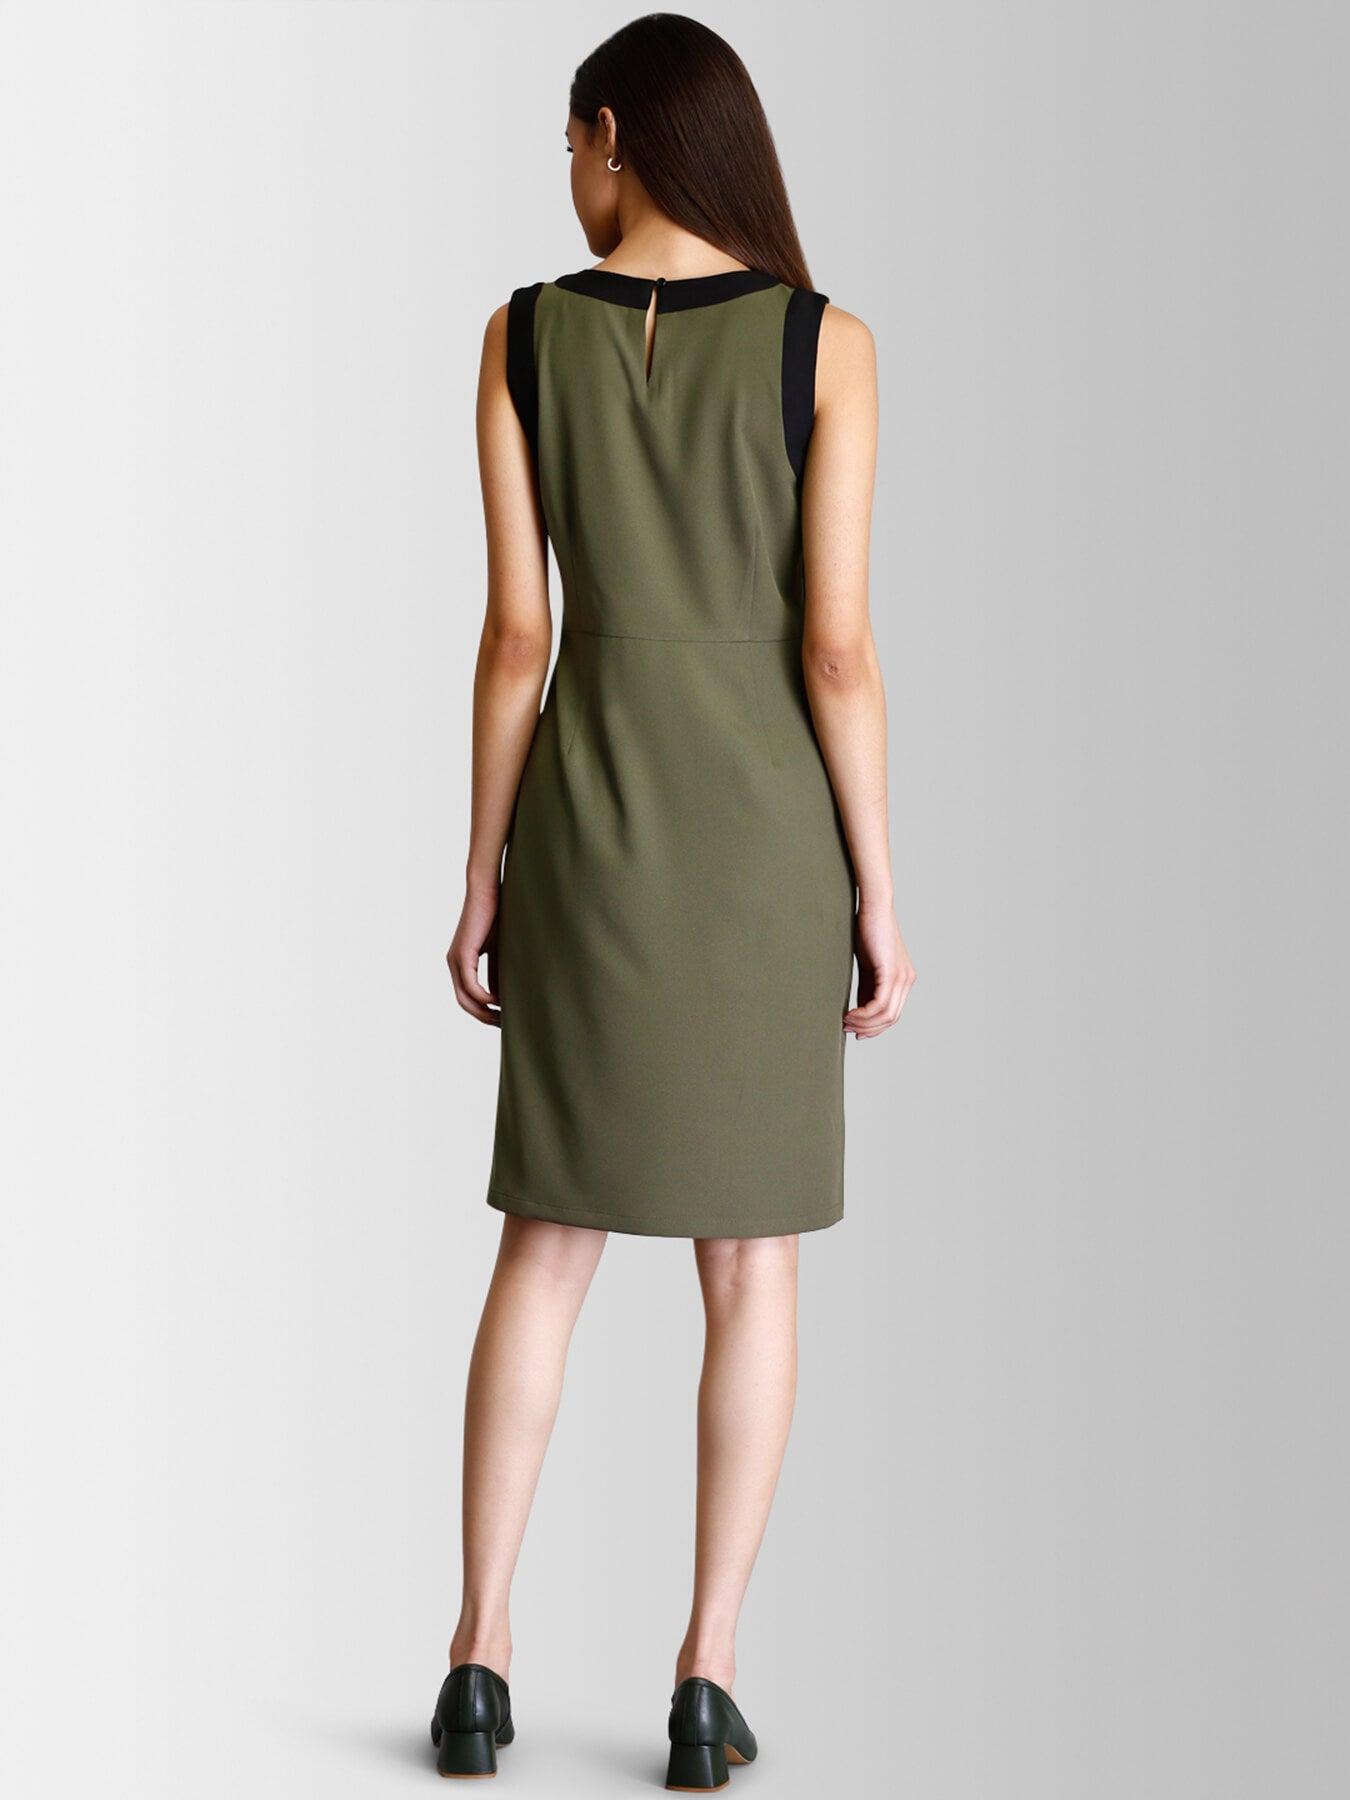 Colour Block Sheath Dress - Olive| Formal Dresses